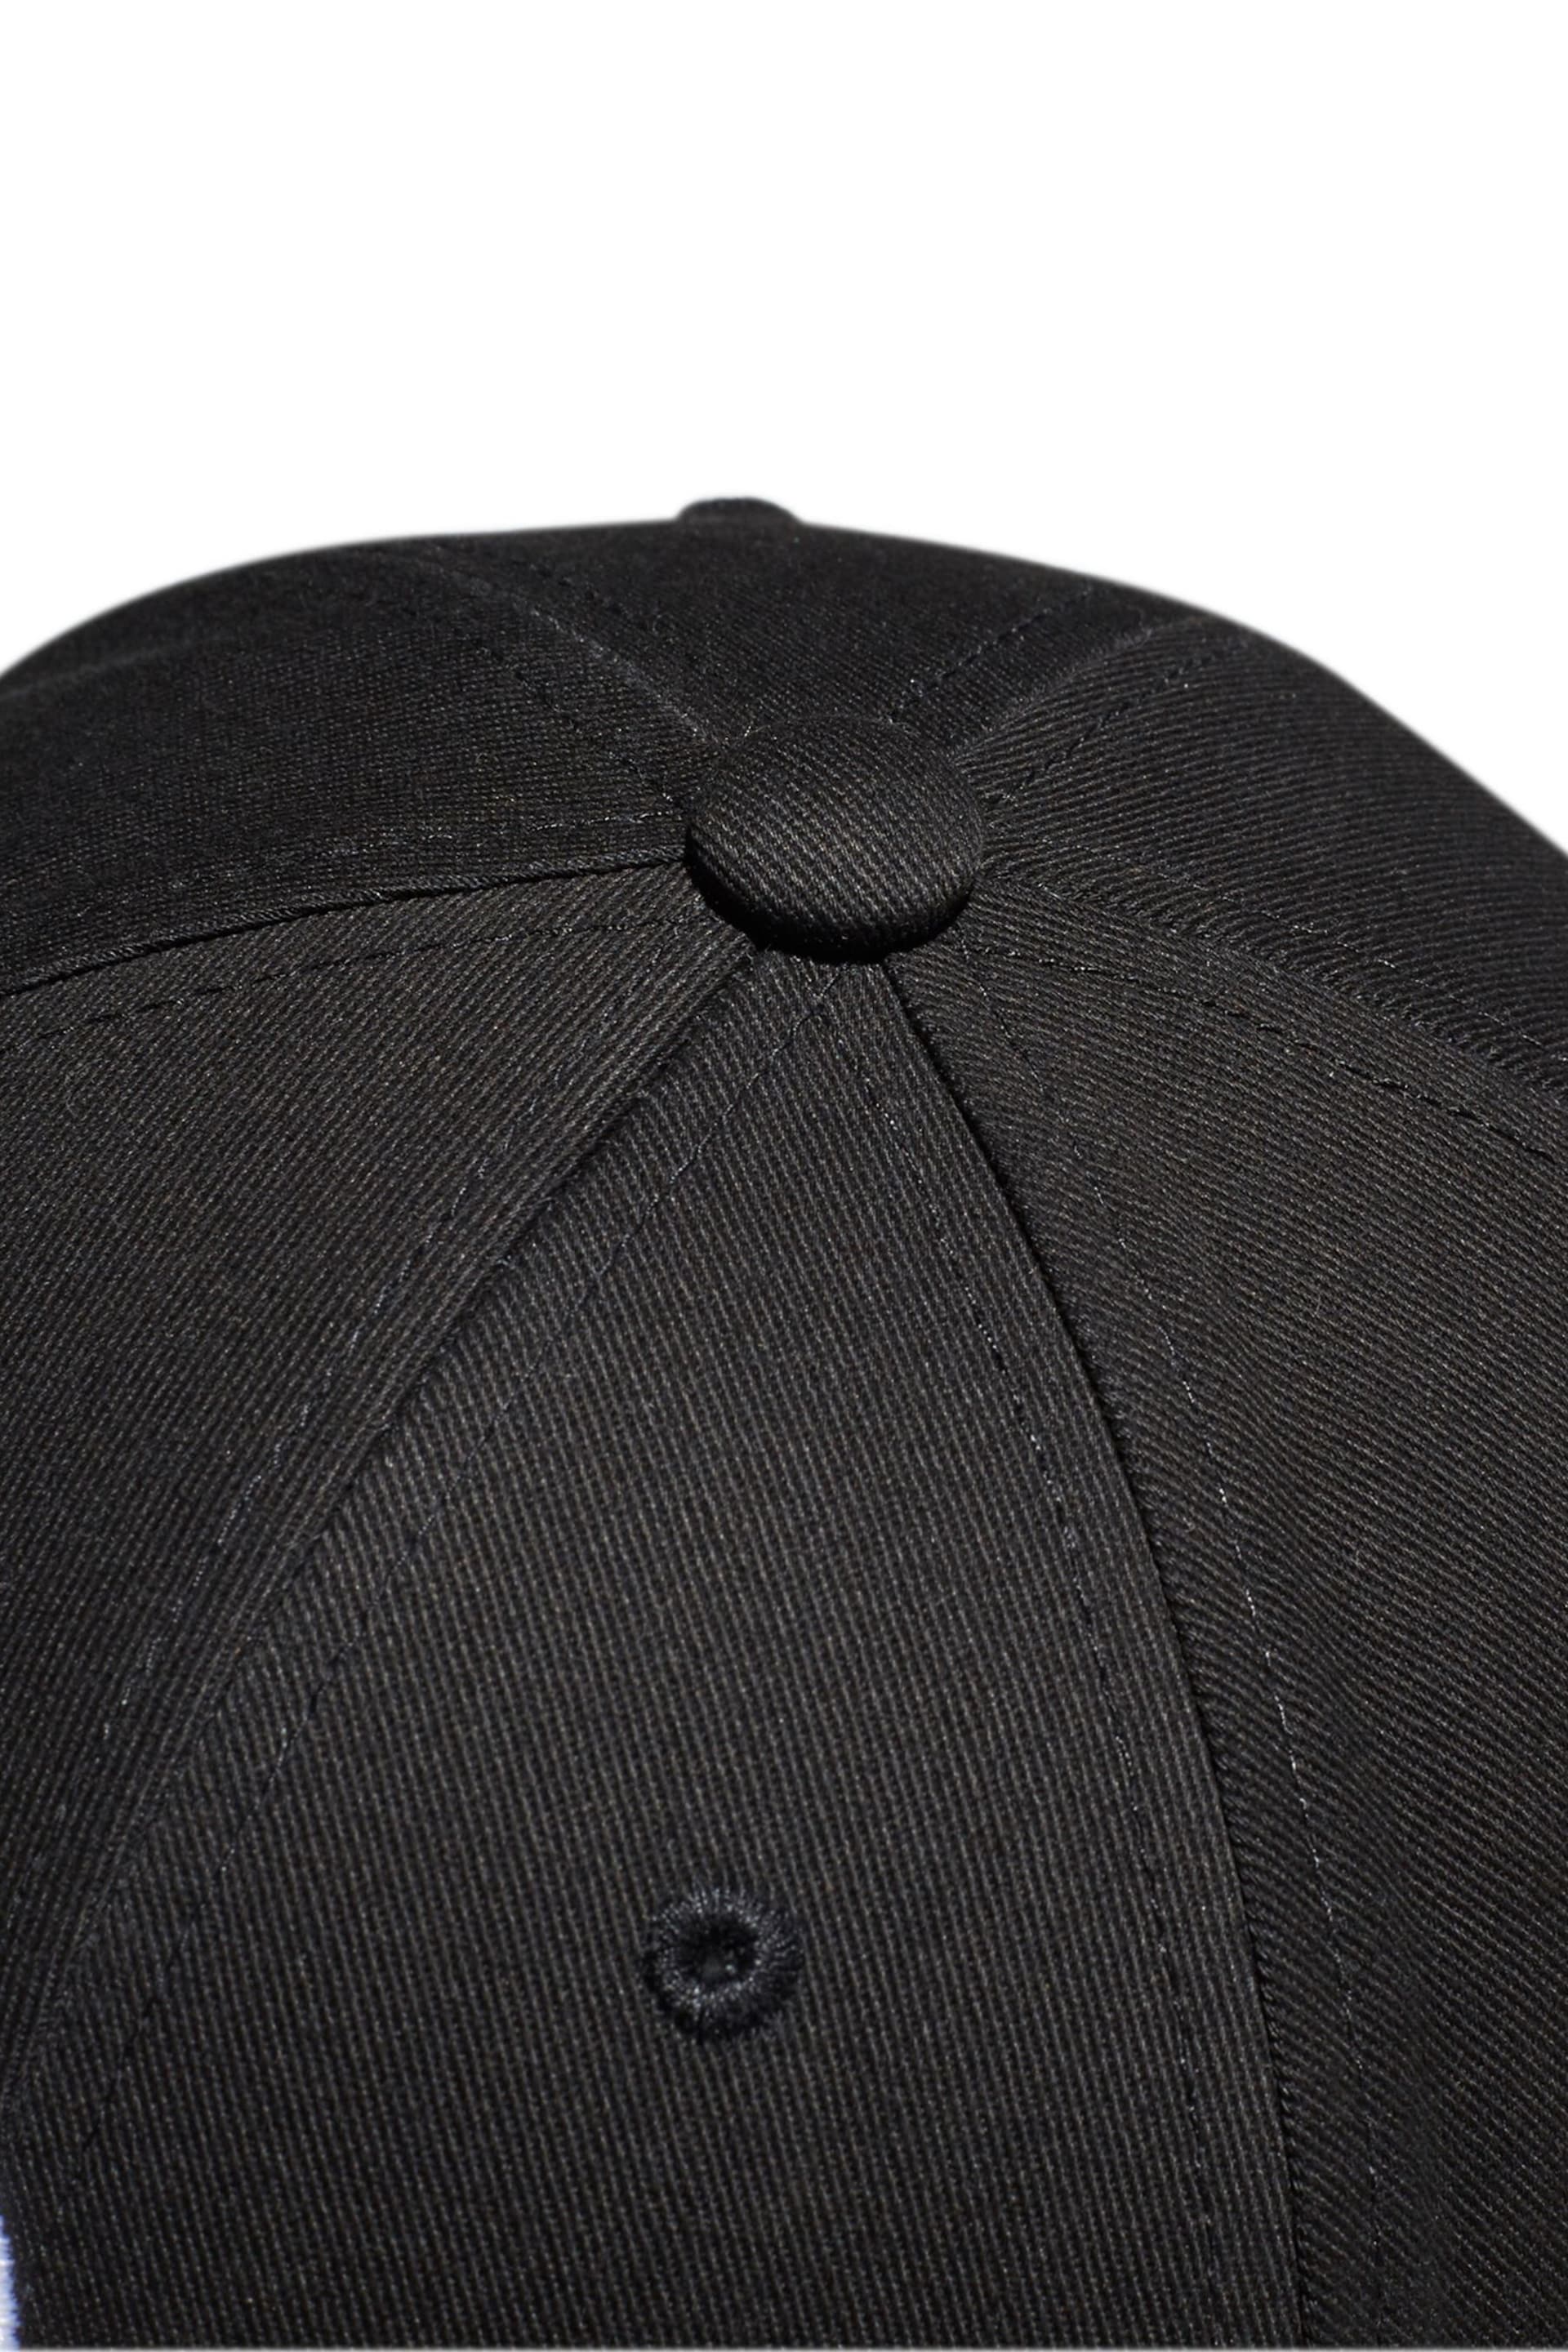 adidas Originals Trefoil Baseball Cap - Image 5 of 6